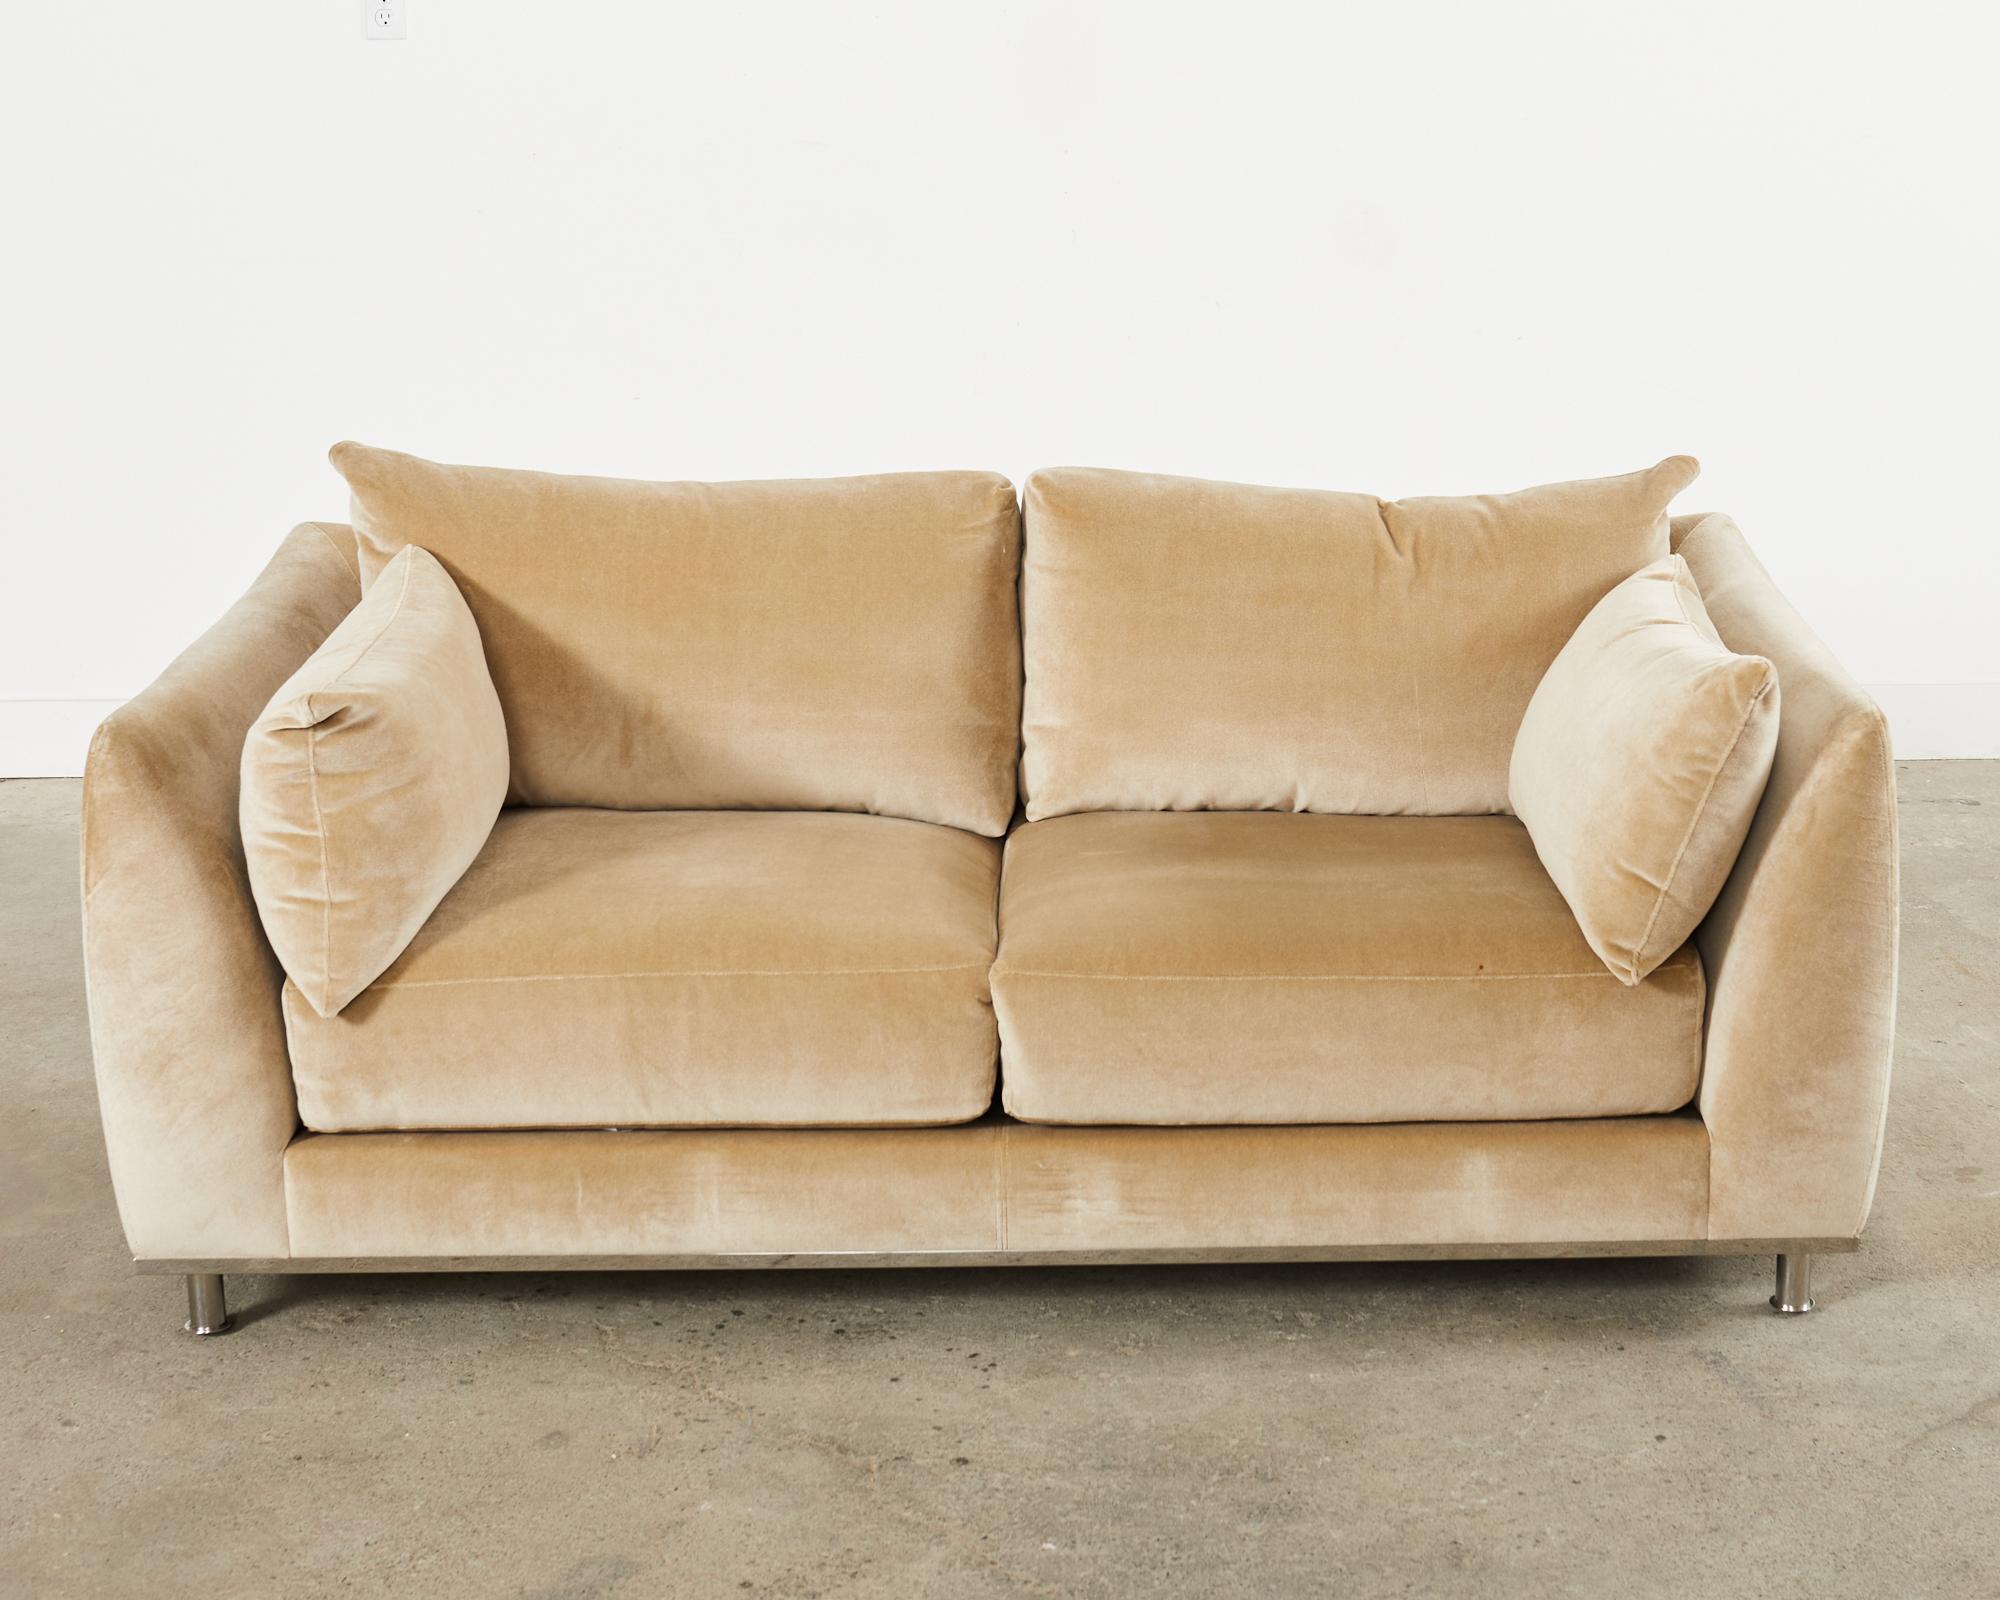 Dakota Jackson Camel Mohair Iko Downs Sofa Settee In Good Condition For Sale In Rio Vista, CA